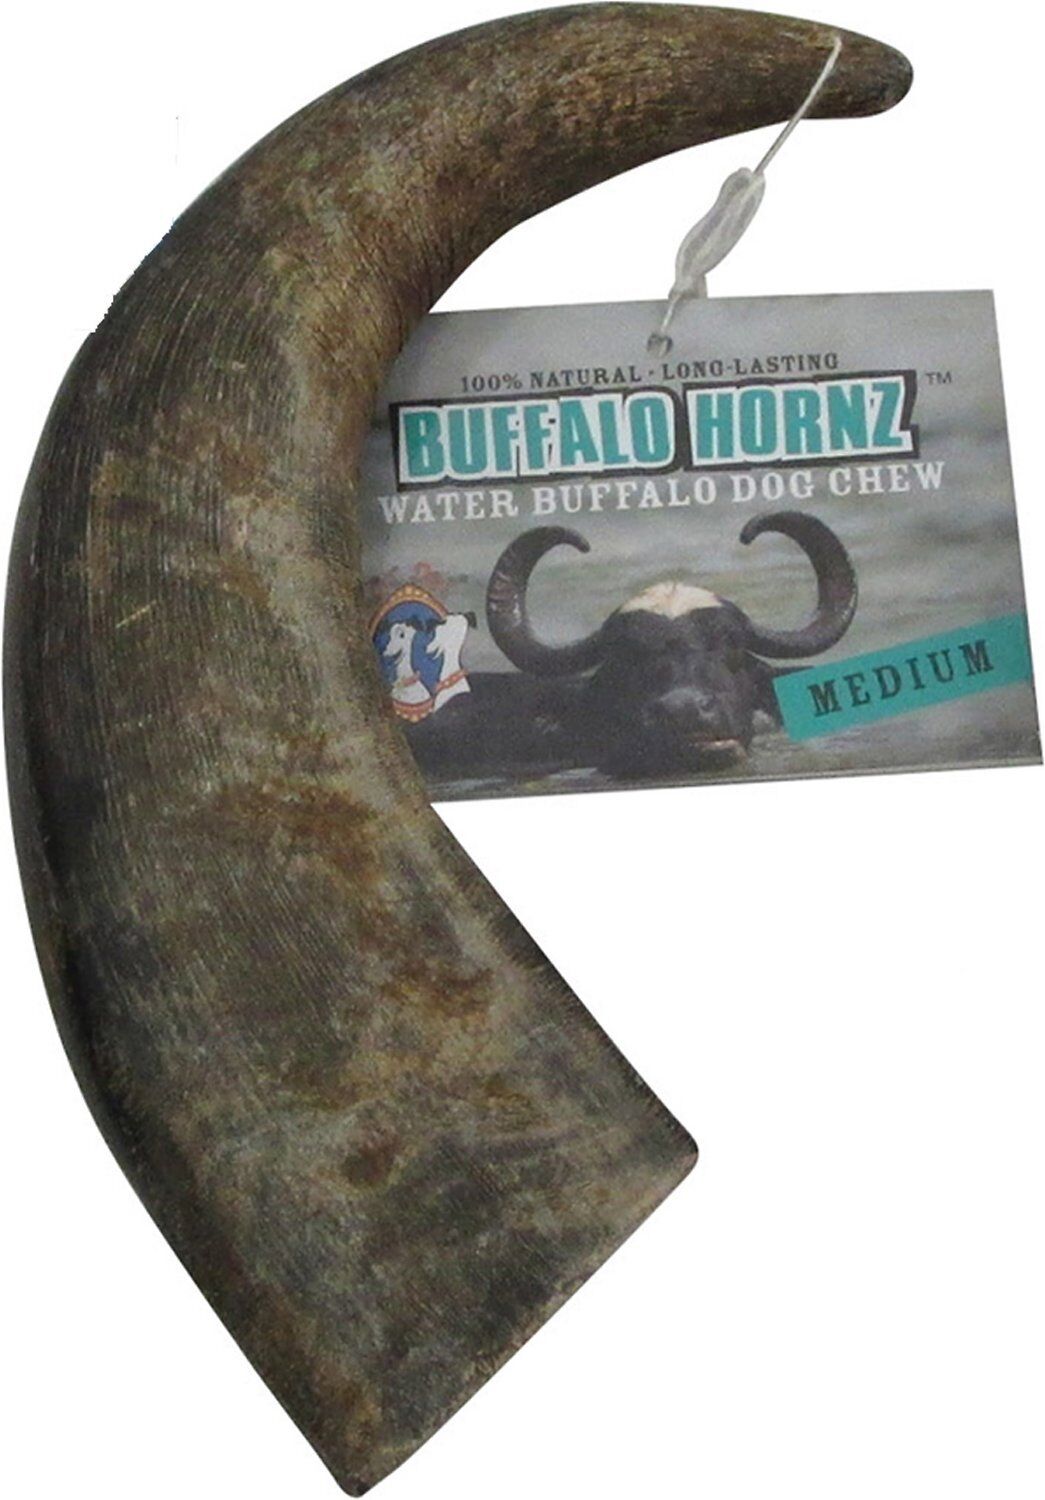 Water Buffalo Horn Dog Treat  - 100% Natural Dog Chew Toy 